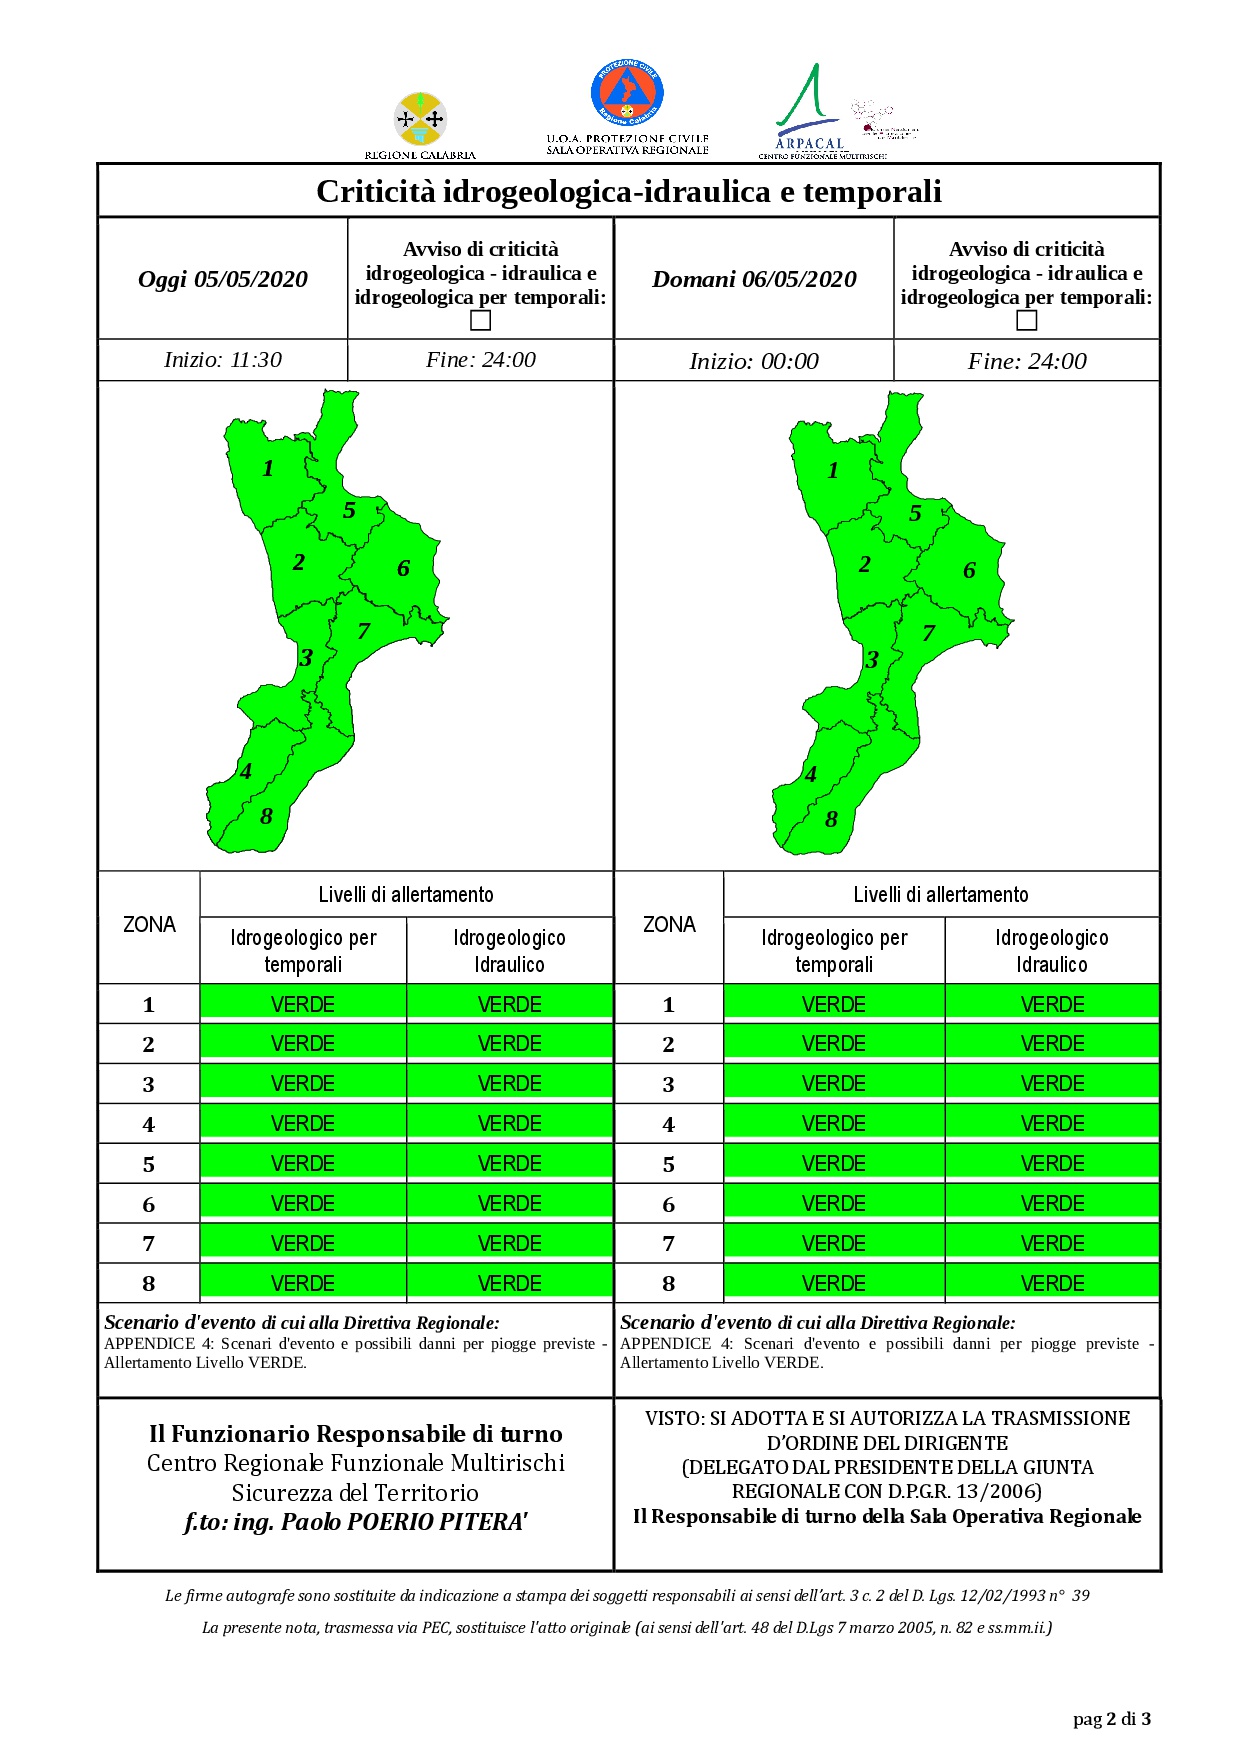 Criticità idrogeologica-idraulica e temporali in Calabria 05-05-2020